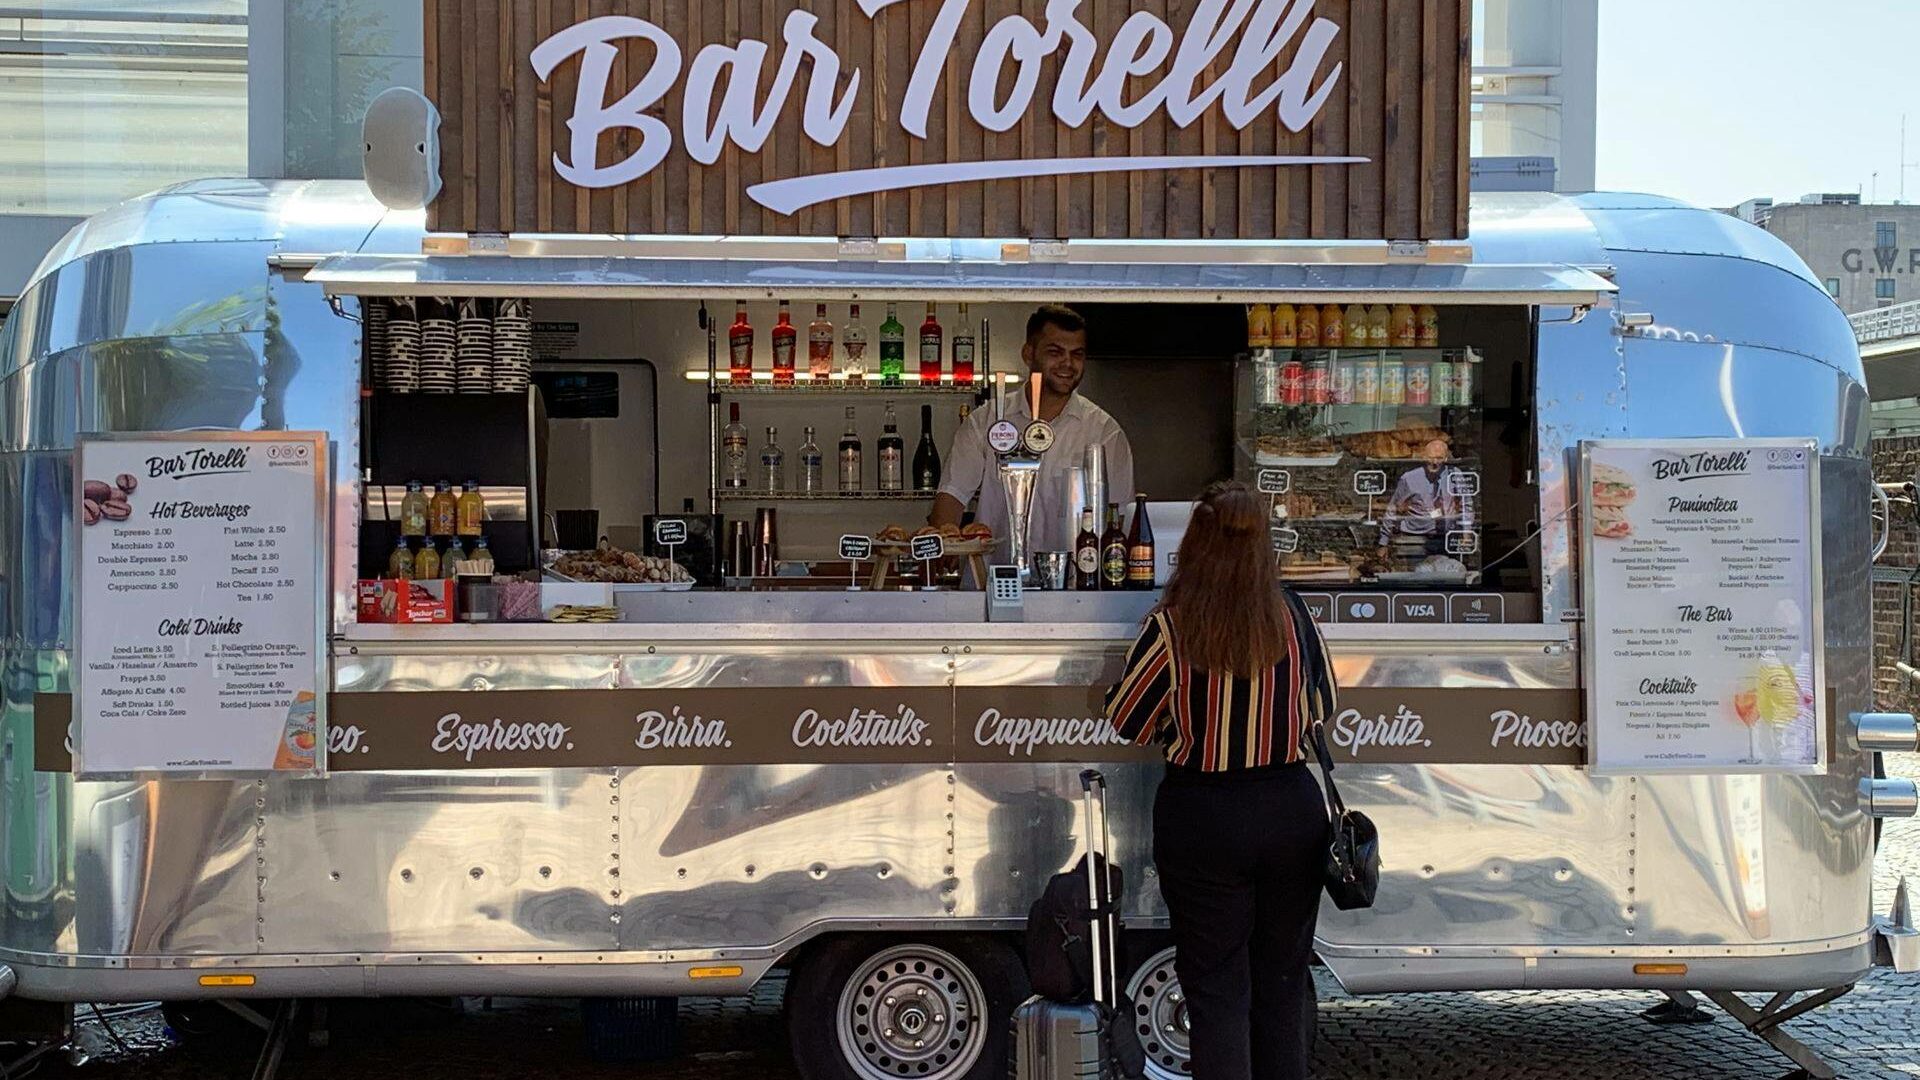 Bar Torelli Airstream food truck, Merchant Square Paddington